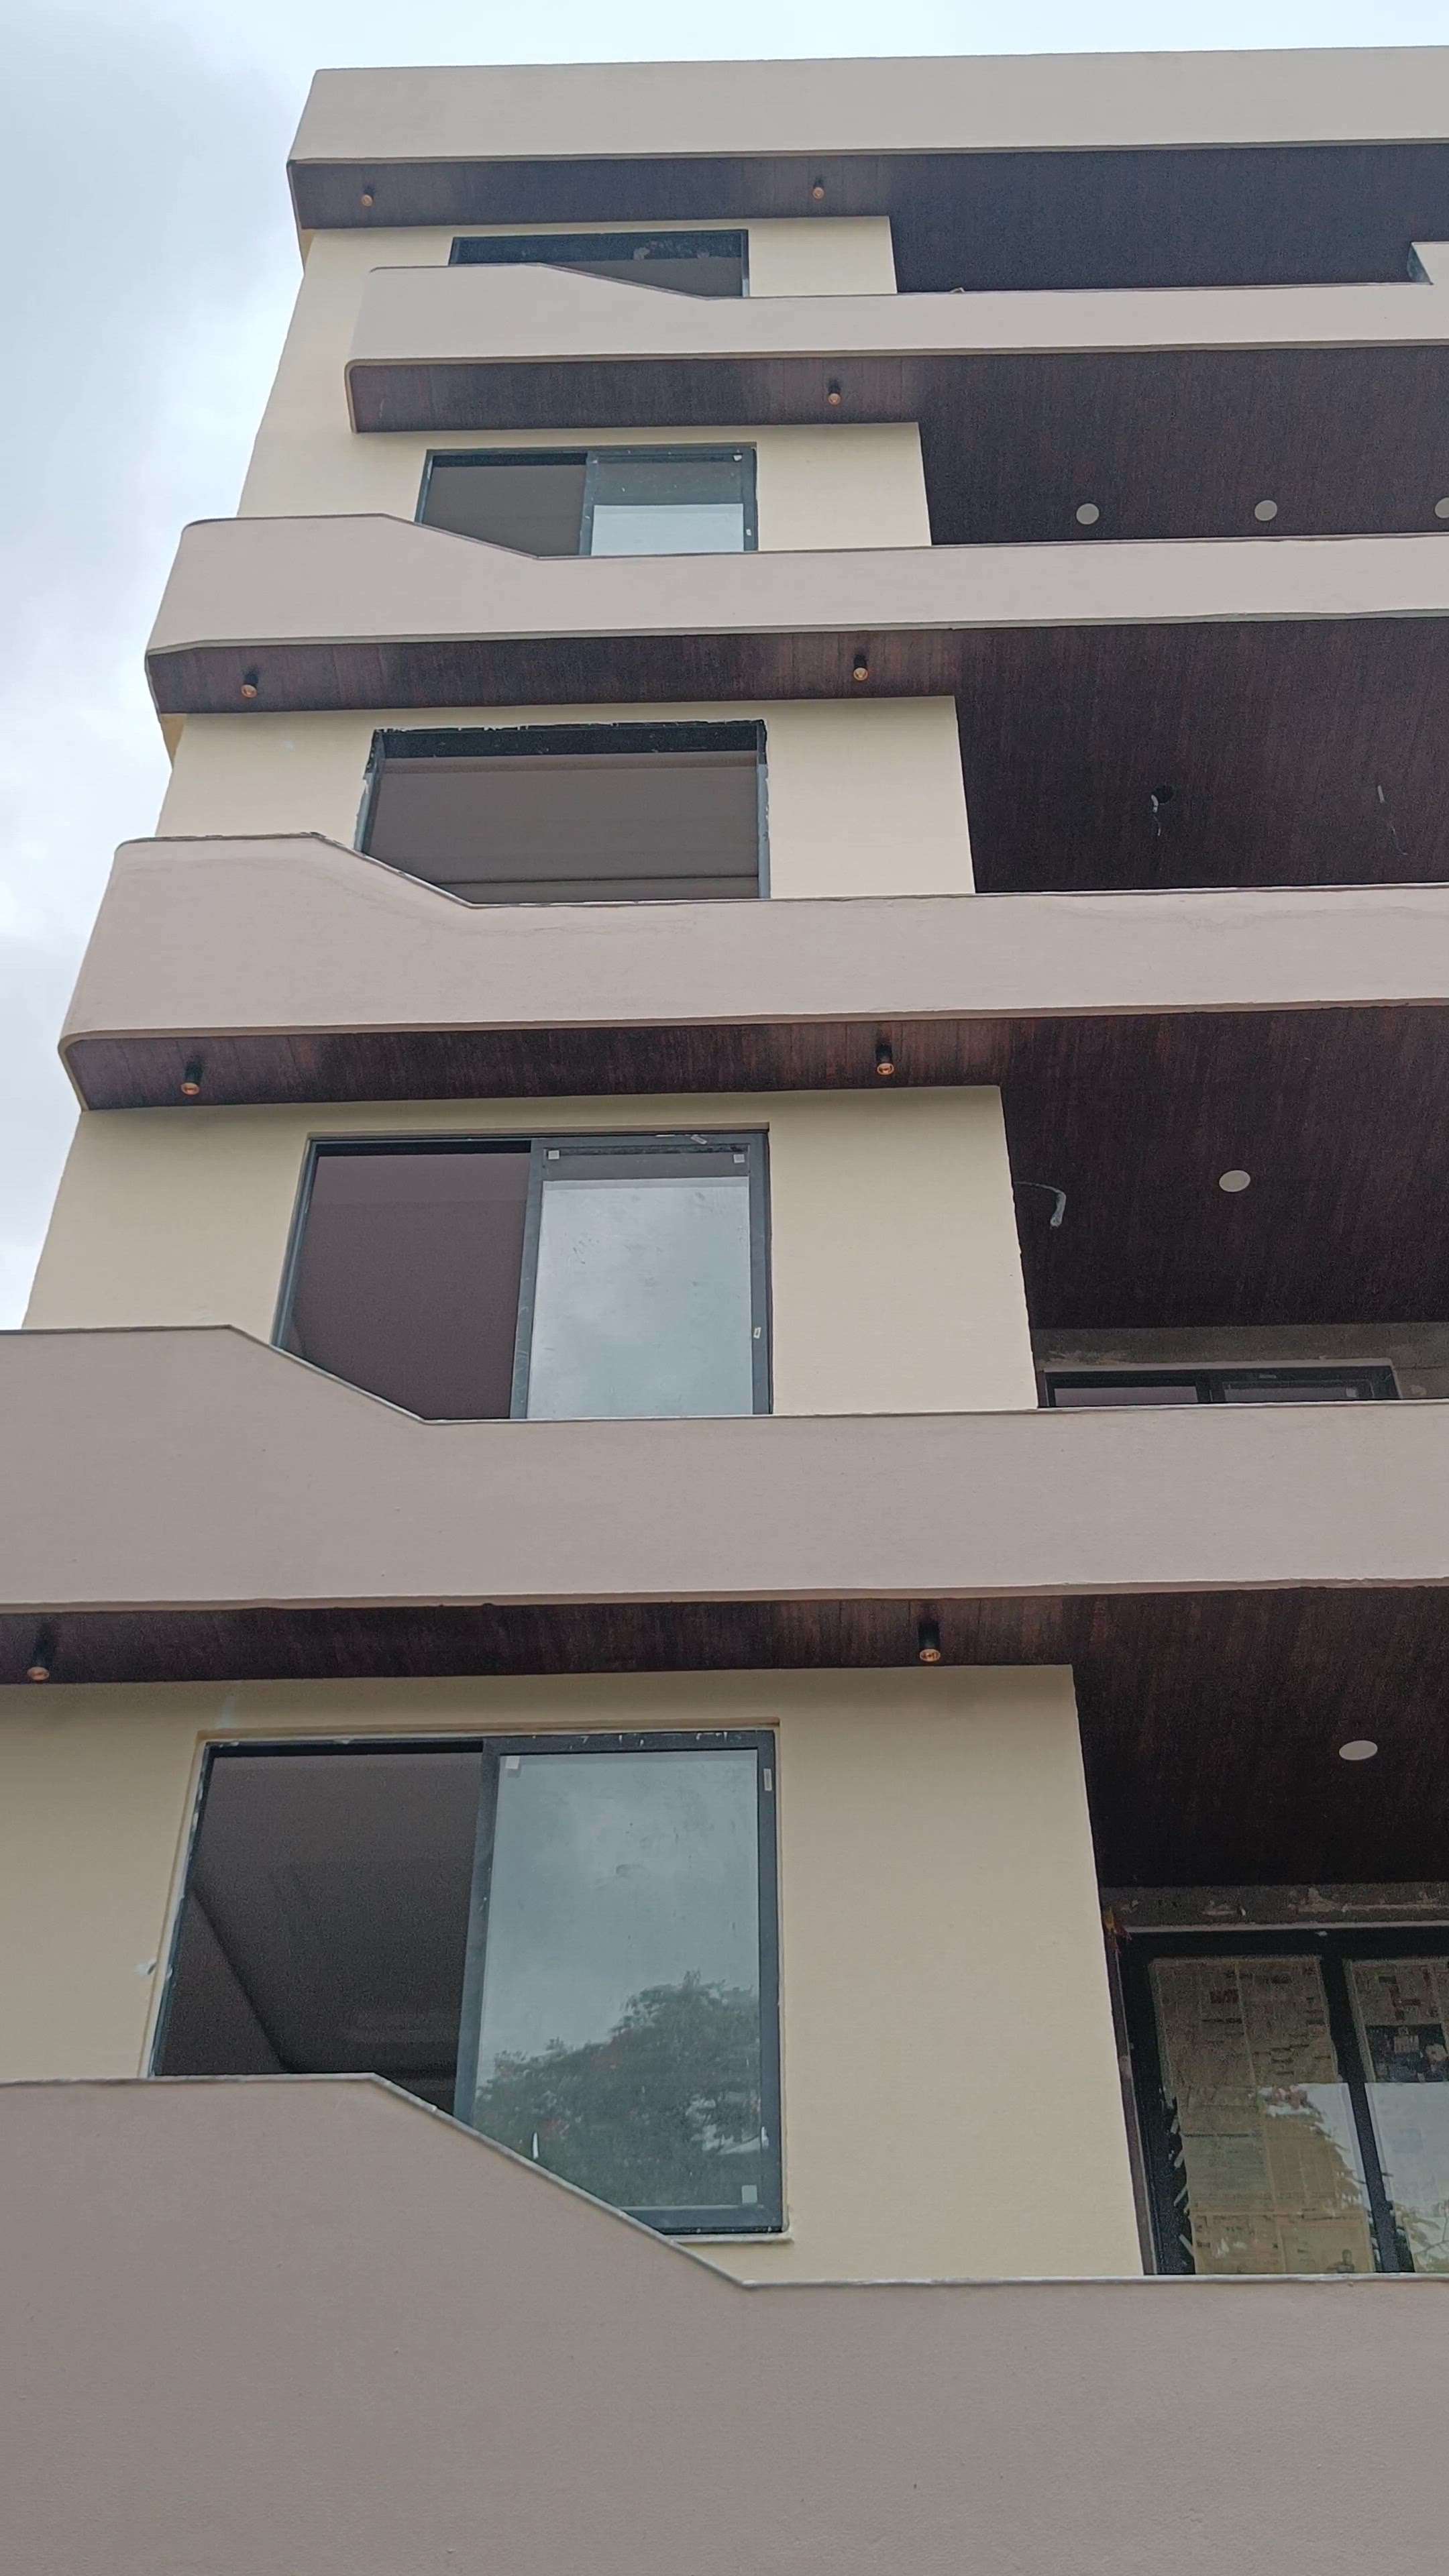 PVC False Ceiling Work  Complete 😍😍😍

#FairDeals #fairdealsjaipur #jaipur #HomeAutomation #HomeDecor #PVCFalseCeiling #Pvc #InteriorDesigner #Architectural&Interior #HouseDesigns #ContemporaryHouse #BalconyCelingDesign #BalconyGarden #Pvcpanel #pvcwallpanel #pvcsheet #pvcceilingdesign #Installing #instahome #homeinterior #Architect #architecturedesigns #wpclouvers #WoodenCeiling #exterior_Work #exteriordesigns #porch #FalseCeiling #jaipurfashion #jaipurtourism #jaipurdiaries #jaipurblog #rajasthani #rajasthandiaries #rajasthan #jodhpur #udaipur #ajmer #pinkcity #pinkcityjaipur #sikar #jaipurphotography #jaipurite #interior_designer_in_rajasthan #alwar #kota #indianarchitecturel #indianarchitectsandbuilders #BuildingSupplies #CivilEngineer #HouseConstruction #ConstructionTools #civil #hashtag #viralkolo #viralvideo #WoodenFlooring #LivingRoomWallPaper #customized_wall